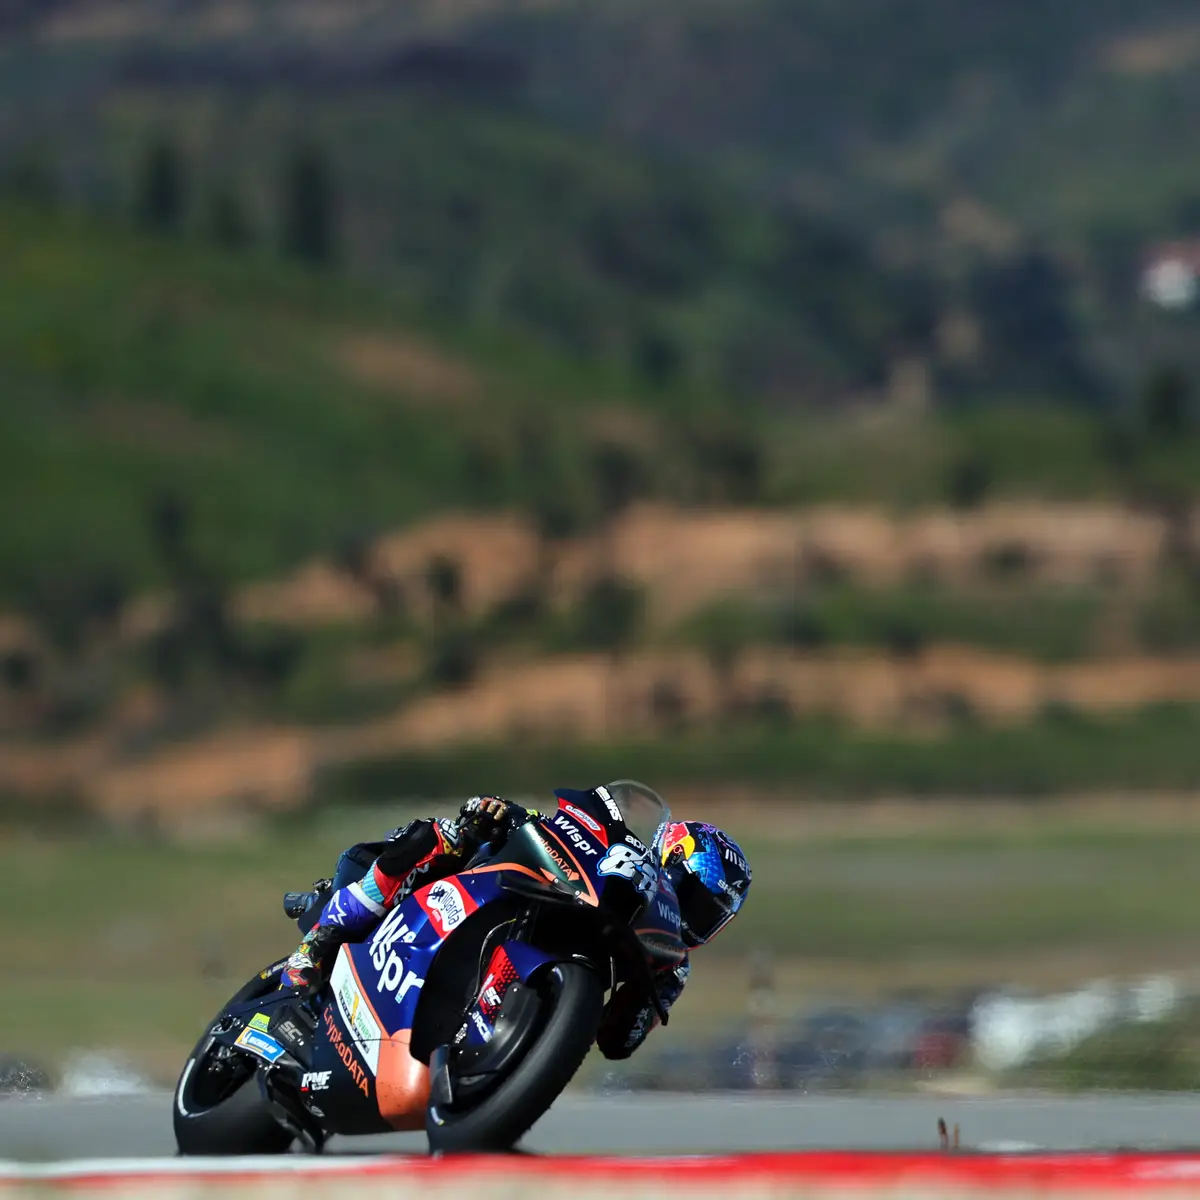 MotoGP: Bagnaia vence corrida sprint em Portugal